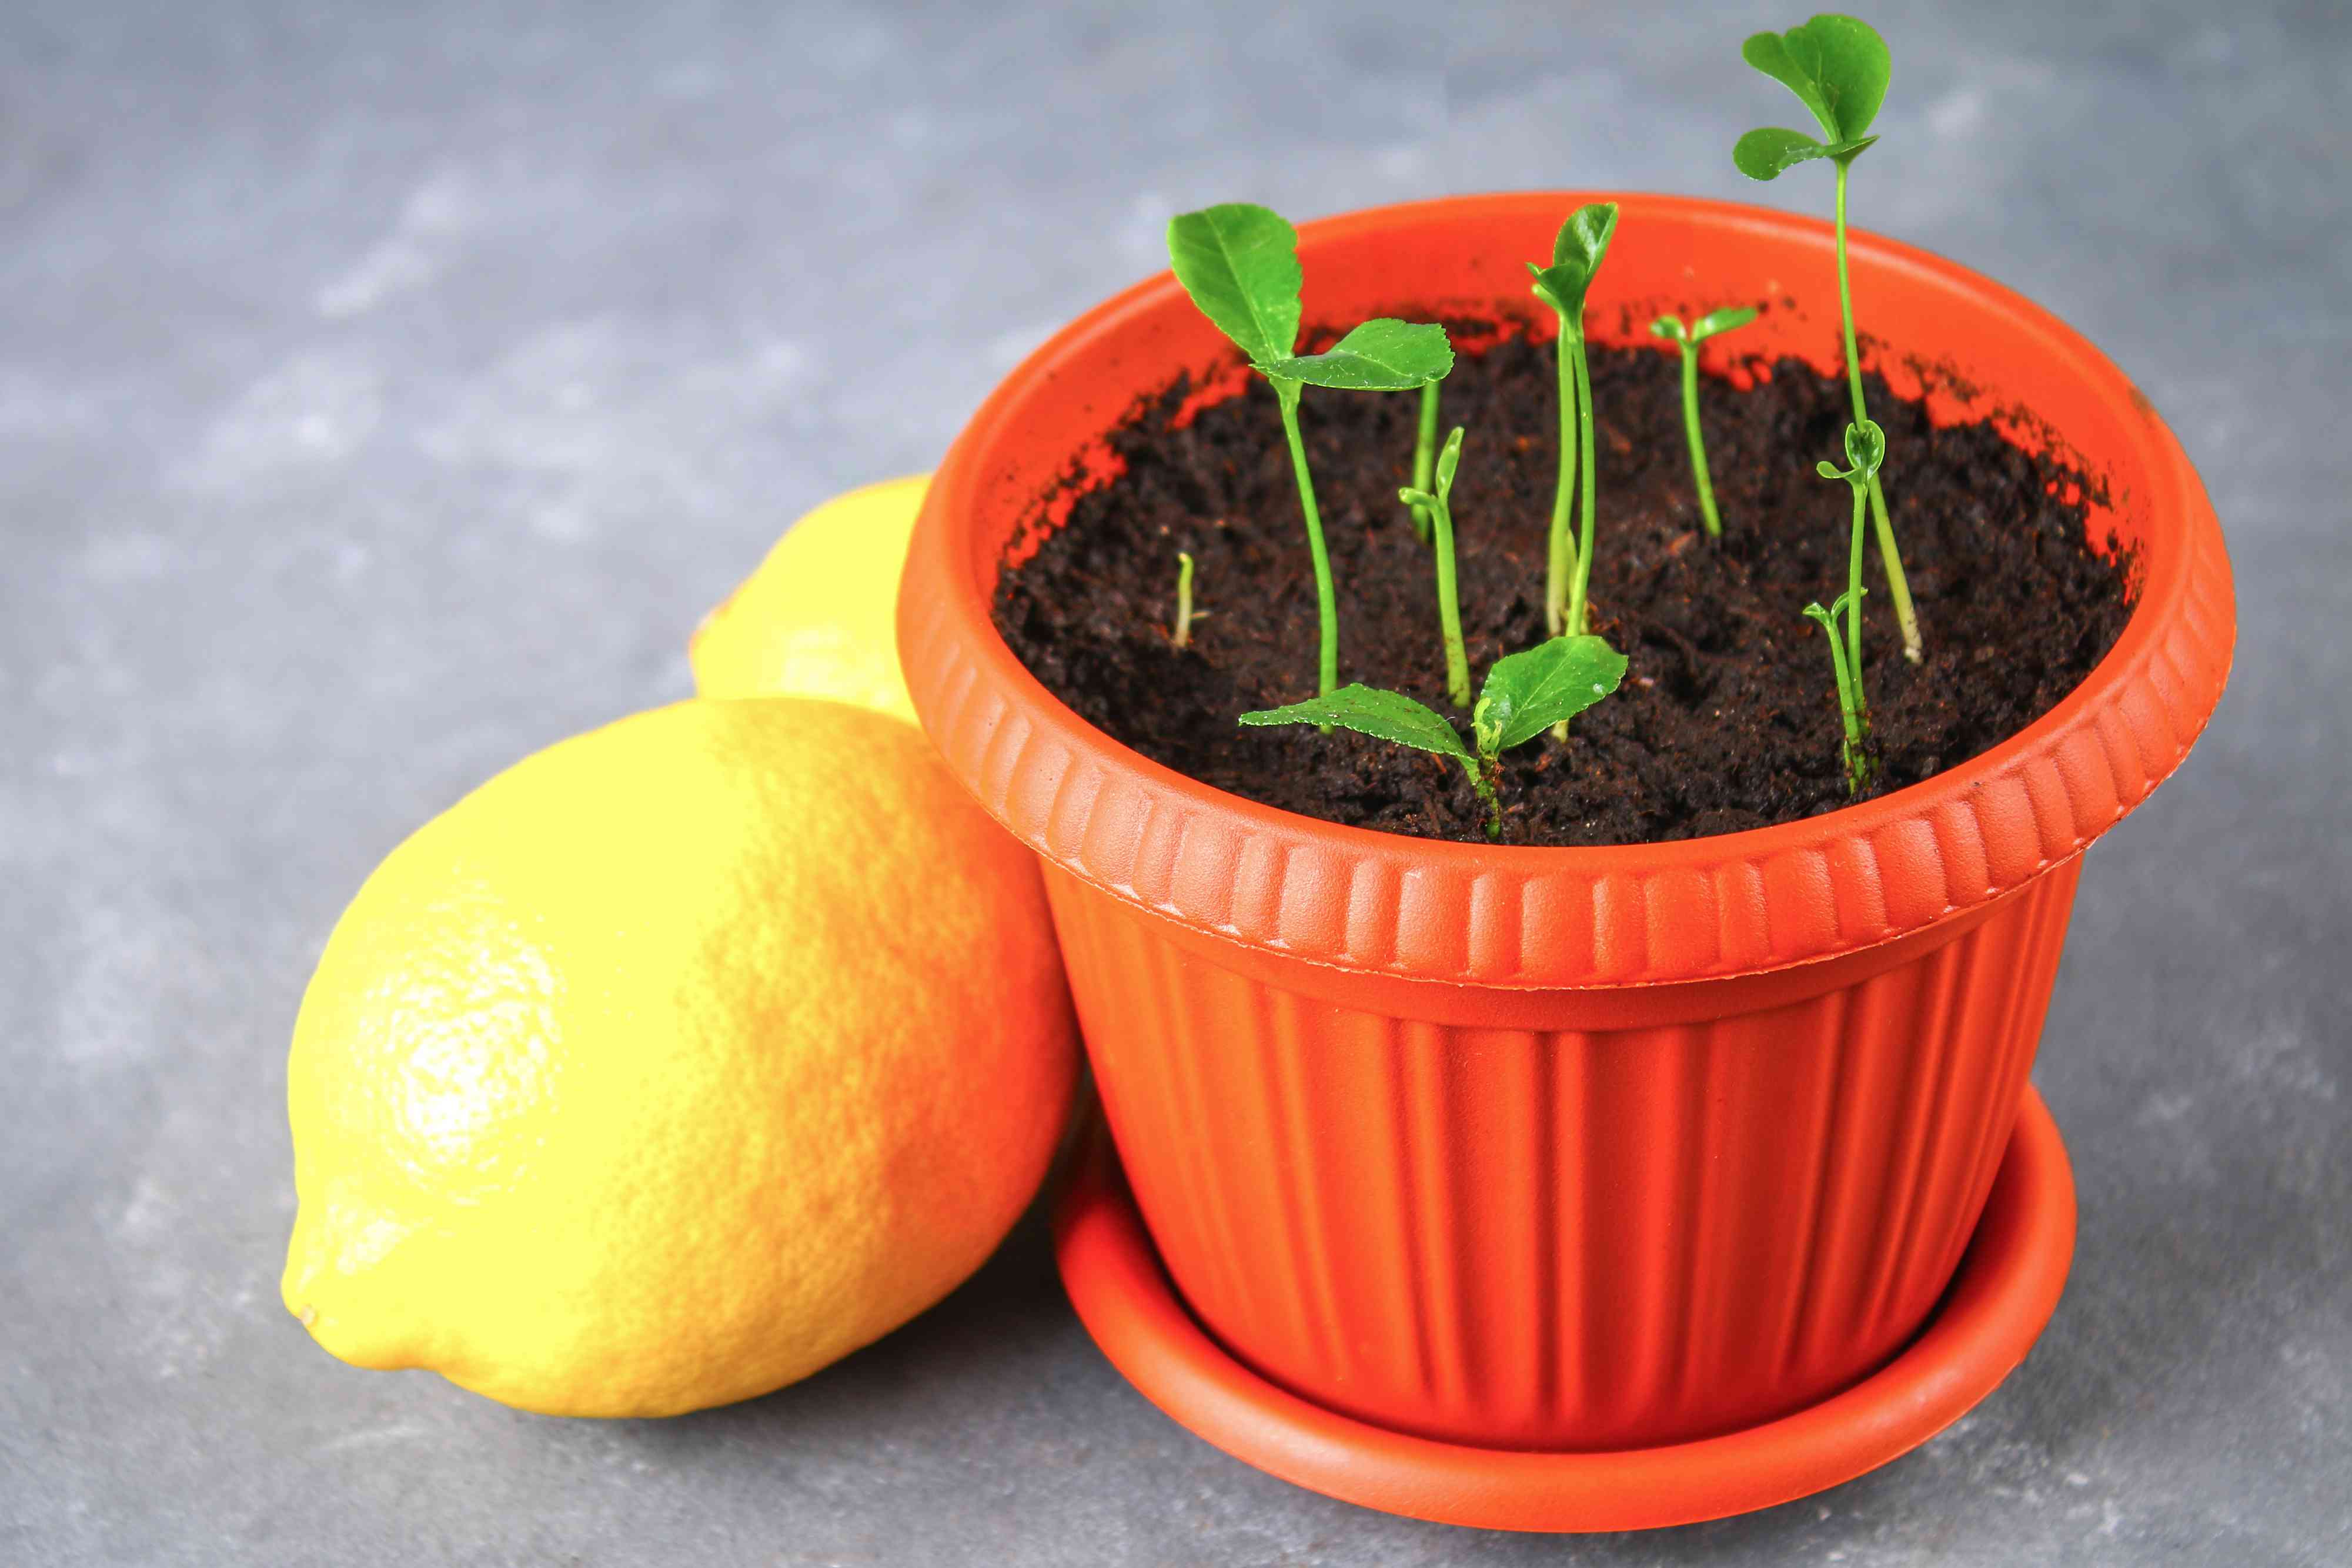 How Do You Grow A Lemon Tree From A Seed